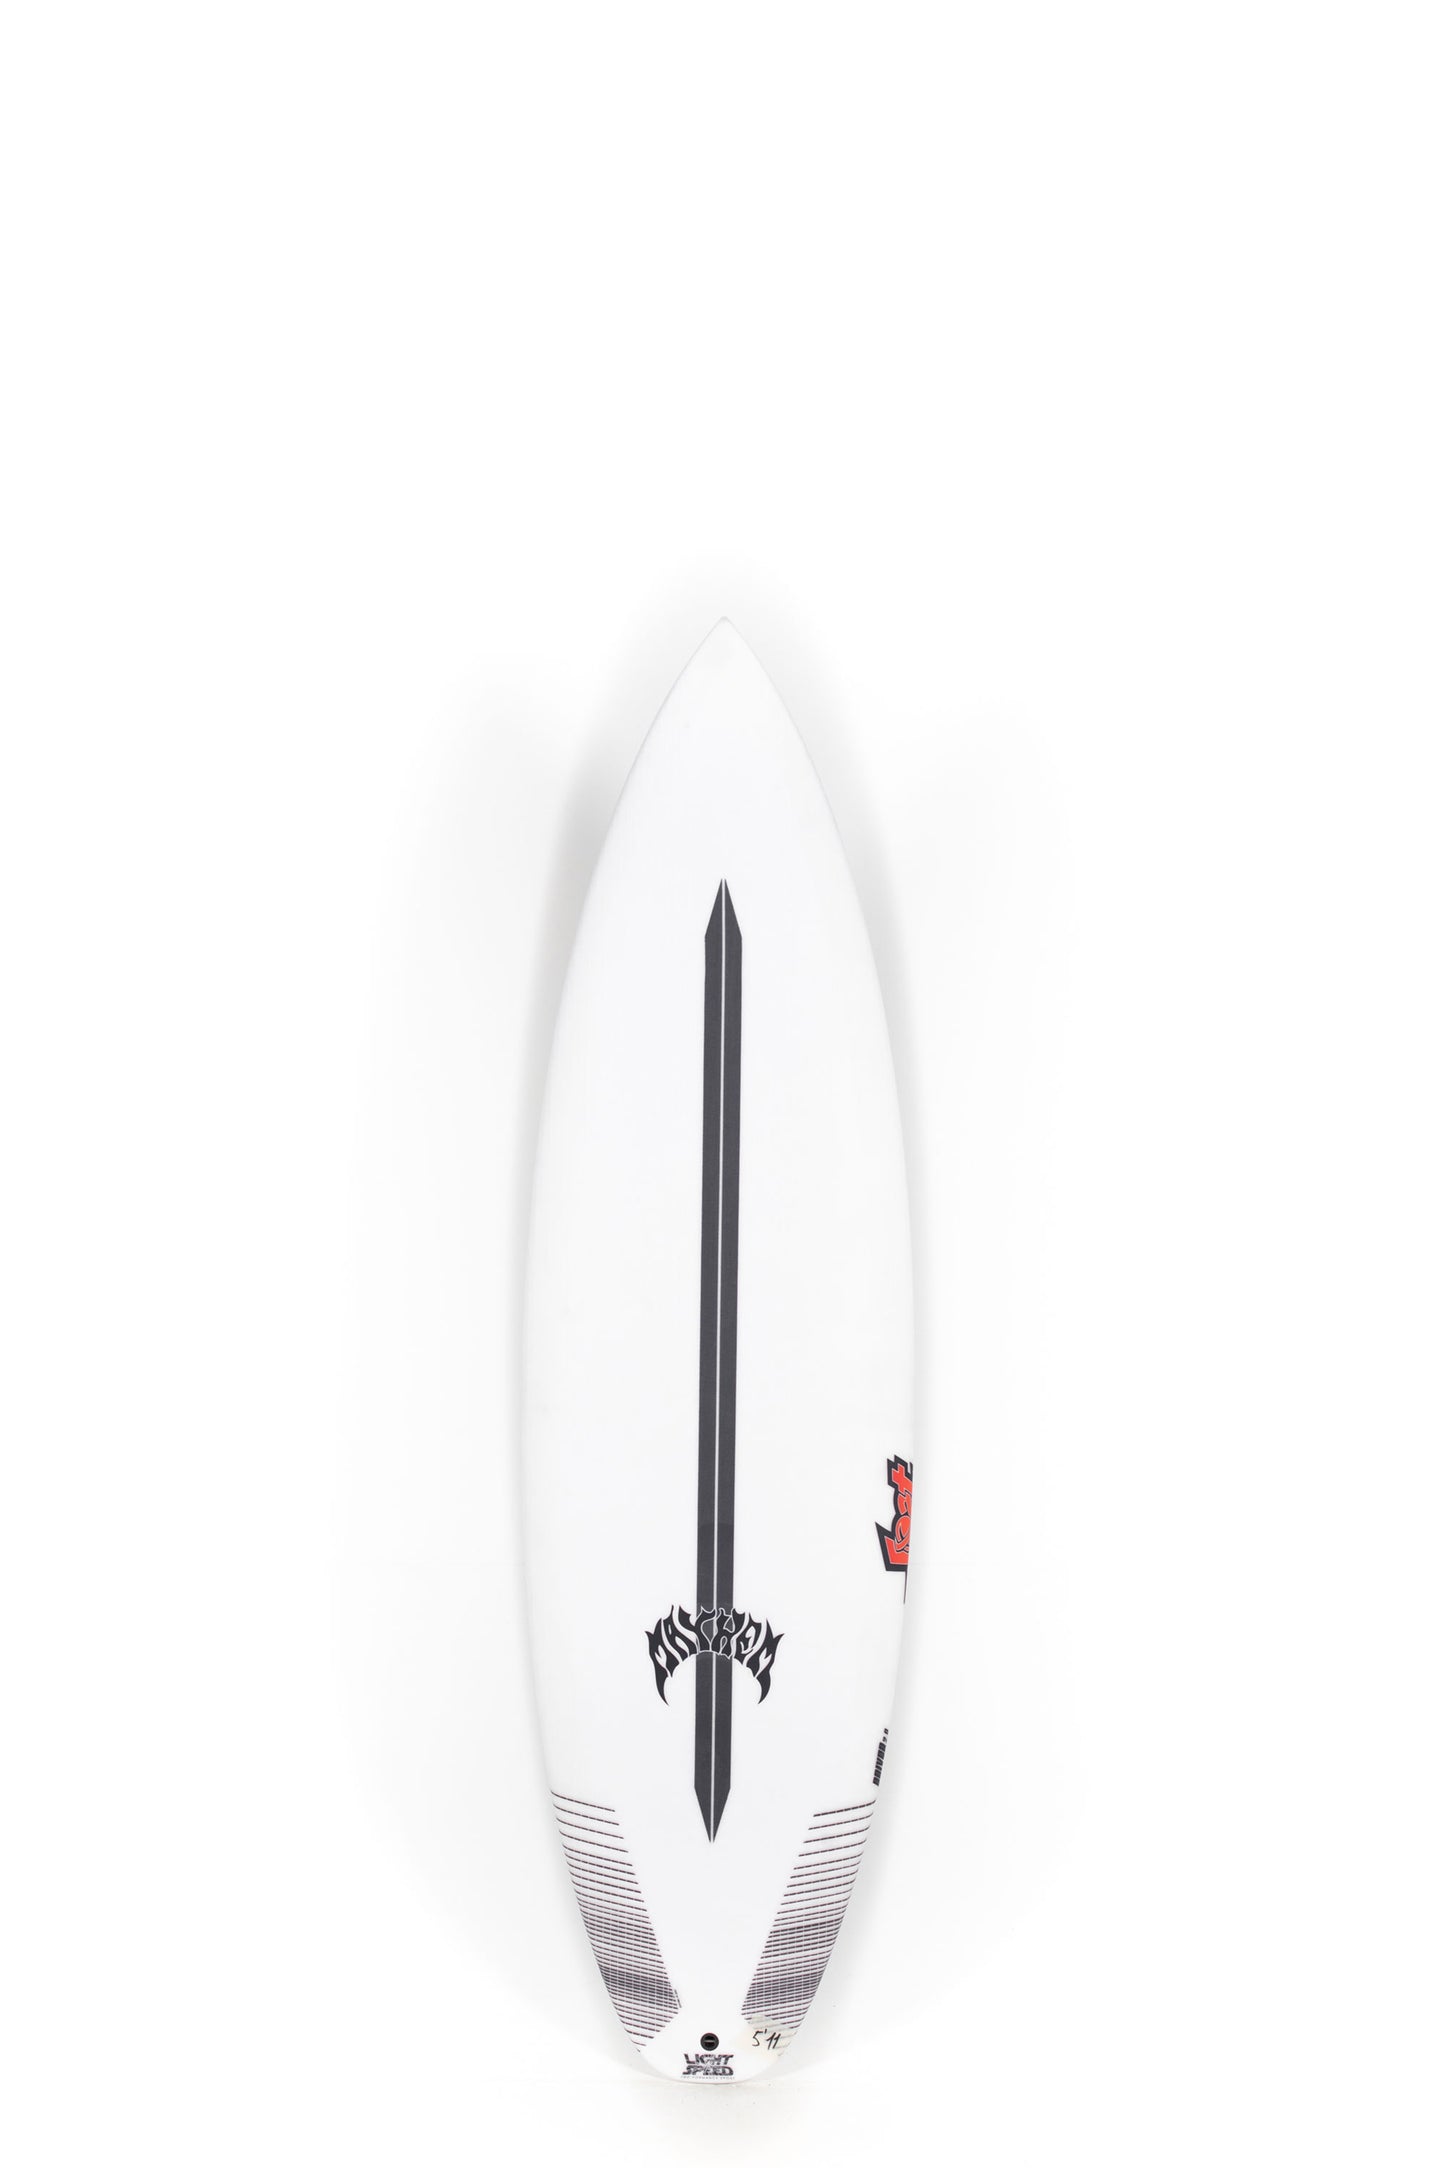 Pukas Surf Shop - Lost Surfboard - DRIVER 2.0 by Matt Biolos - Light Speed - 6’4” x 21 x 2,66 - 38L